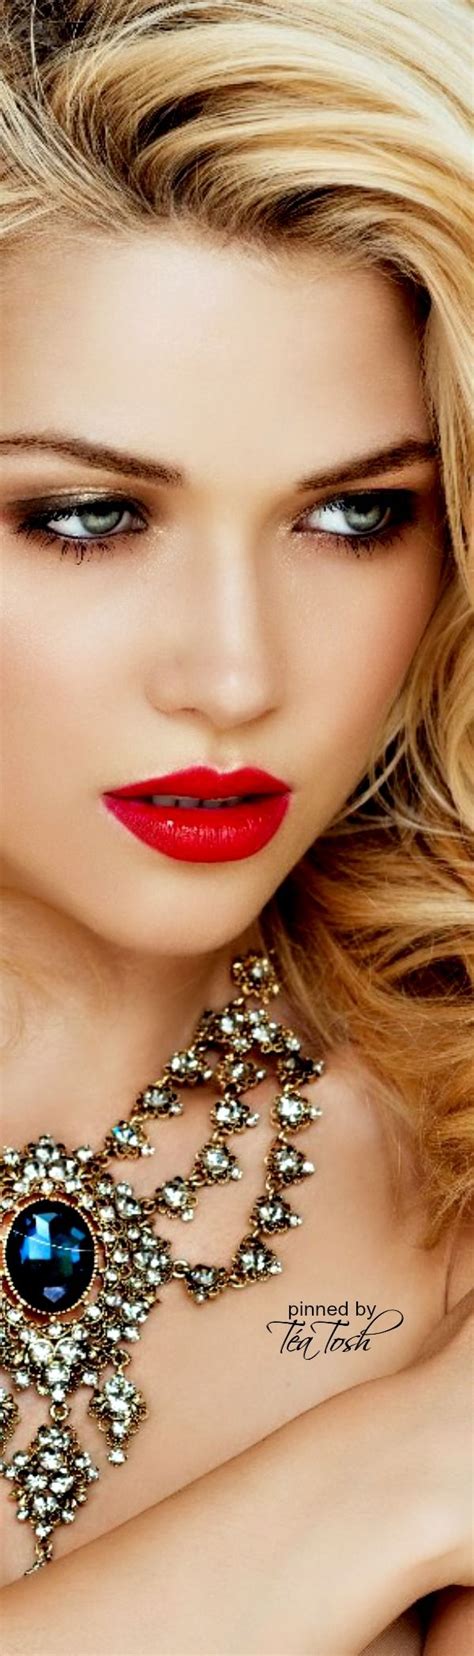 téa tosh beautiful eyes perfect red lips beautiful blonde